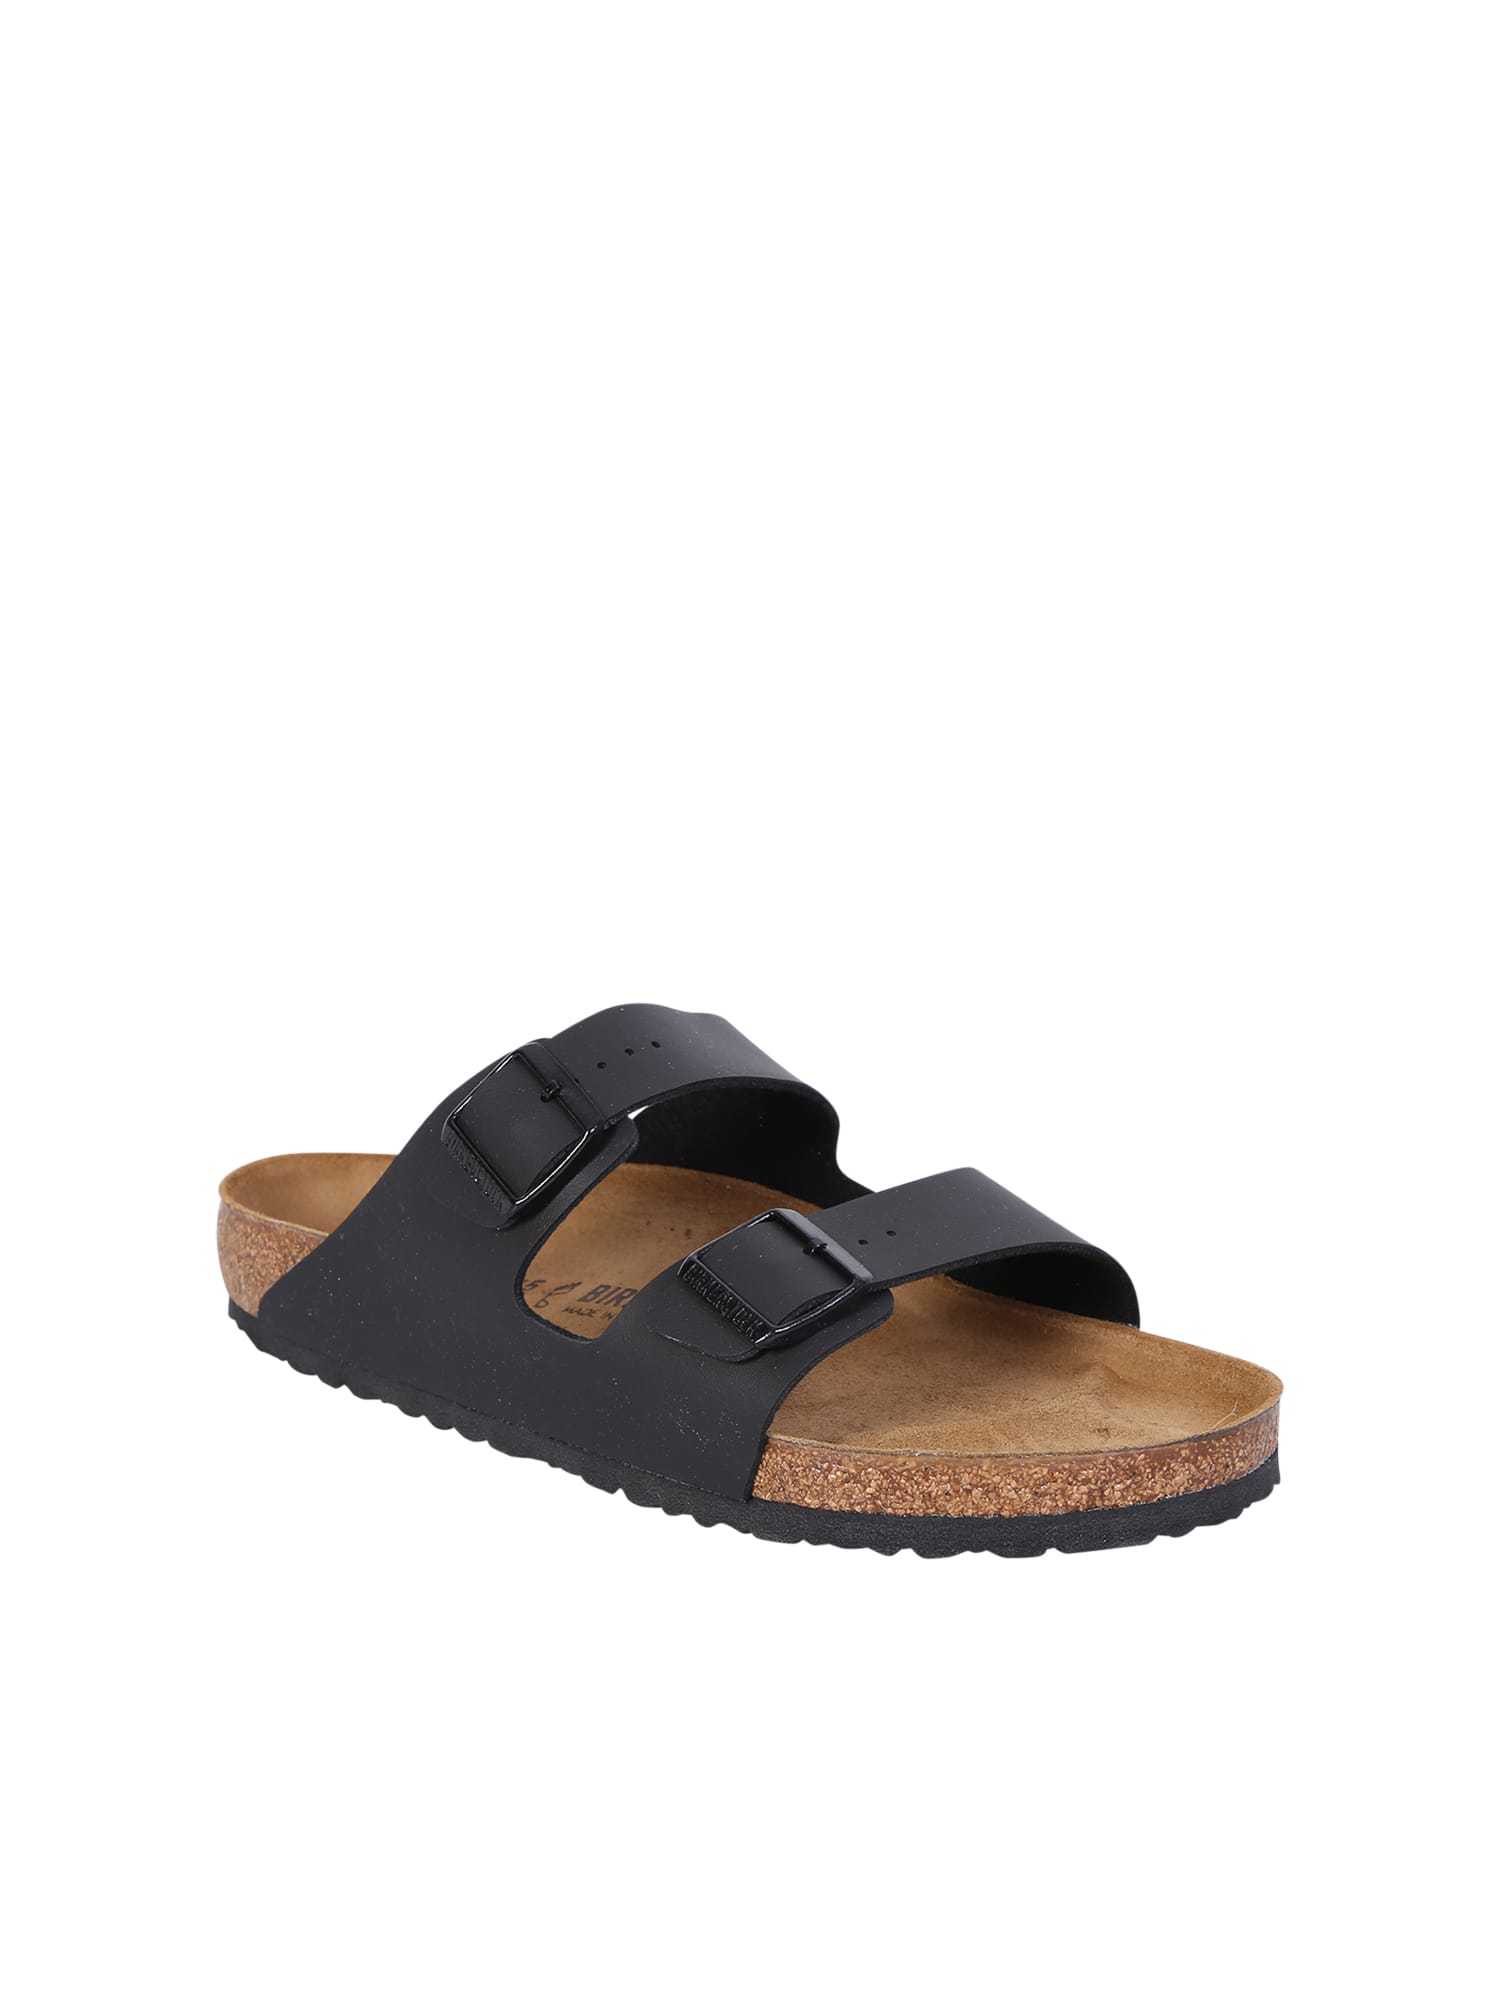 Shop Birkenstock Double-strap Black Sandals